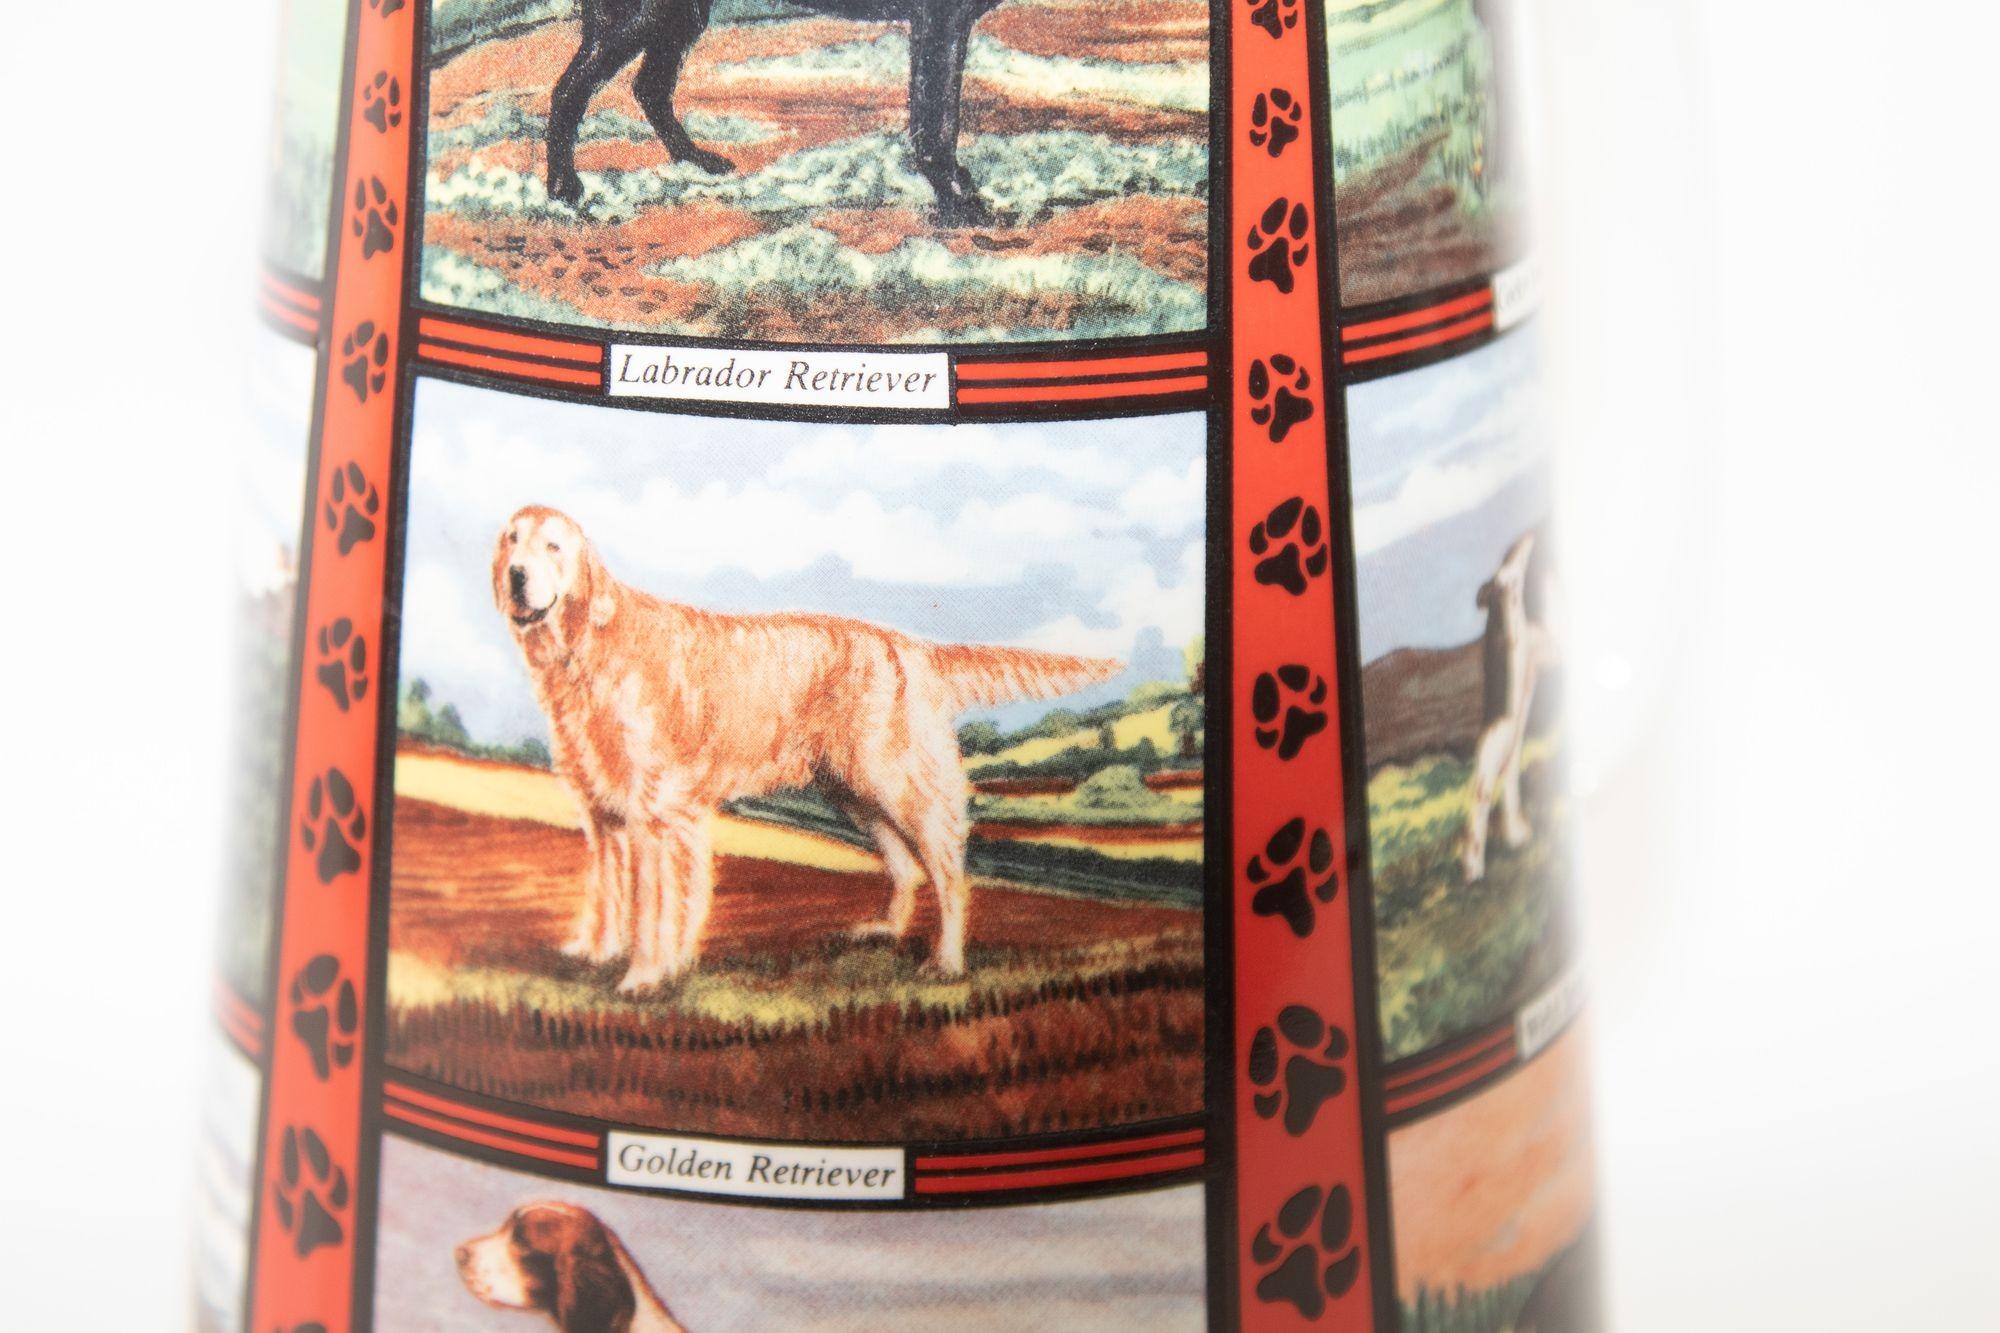 Vintage 1970s Ceramic Pitcher, Derbyshire England with Dog Breeds Pictures For Sale 9